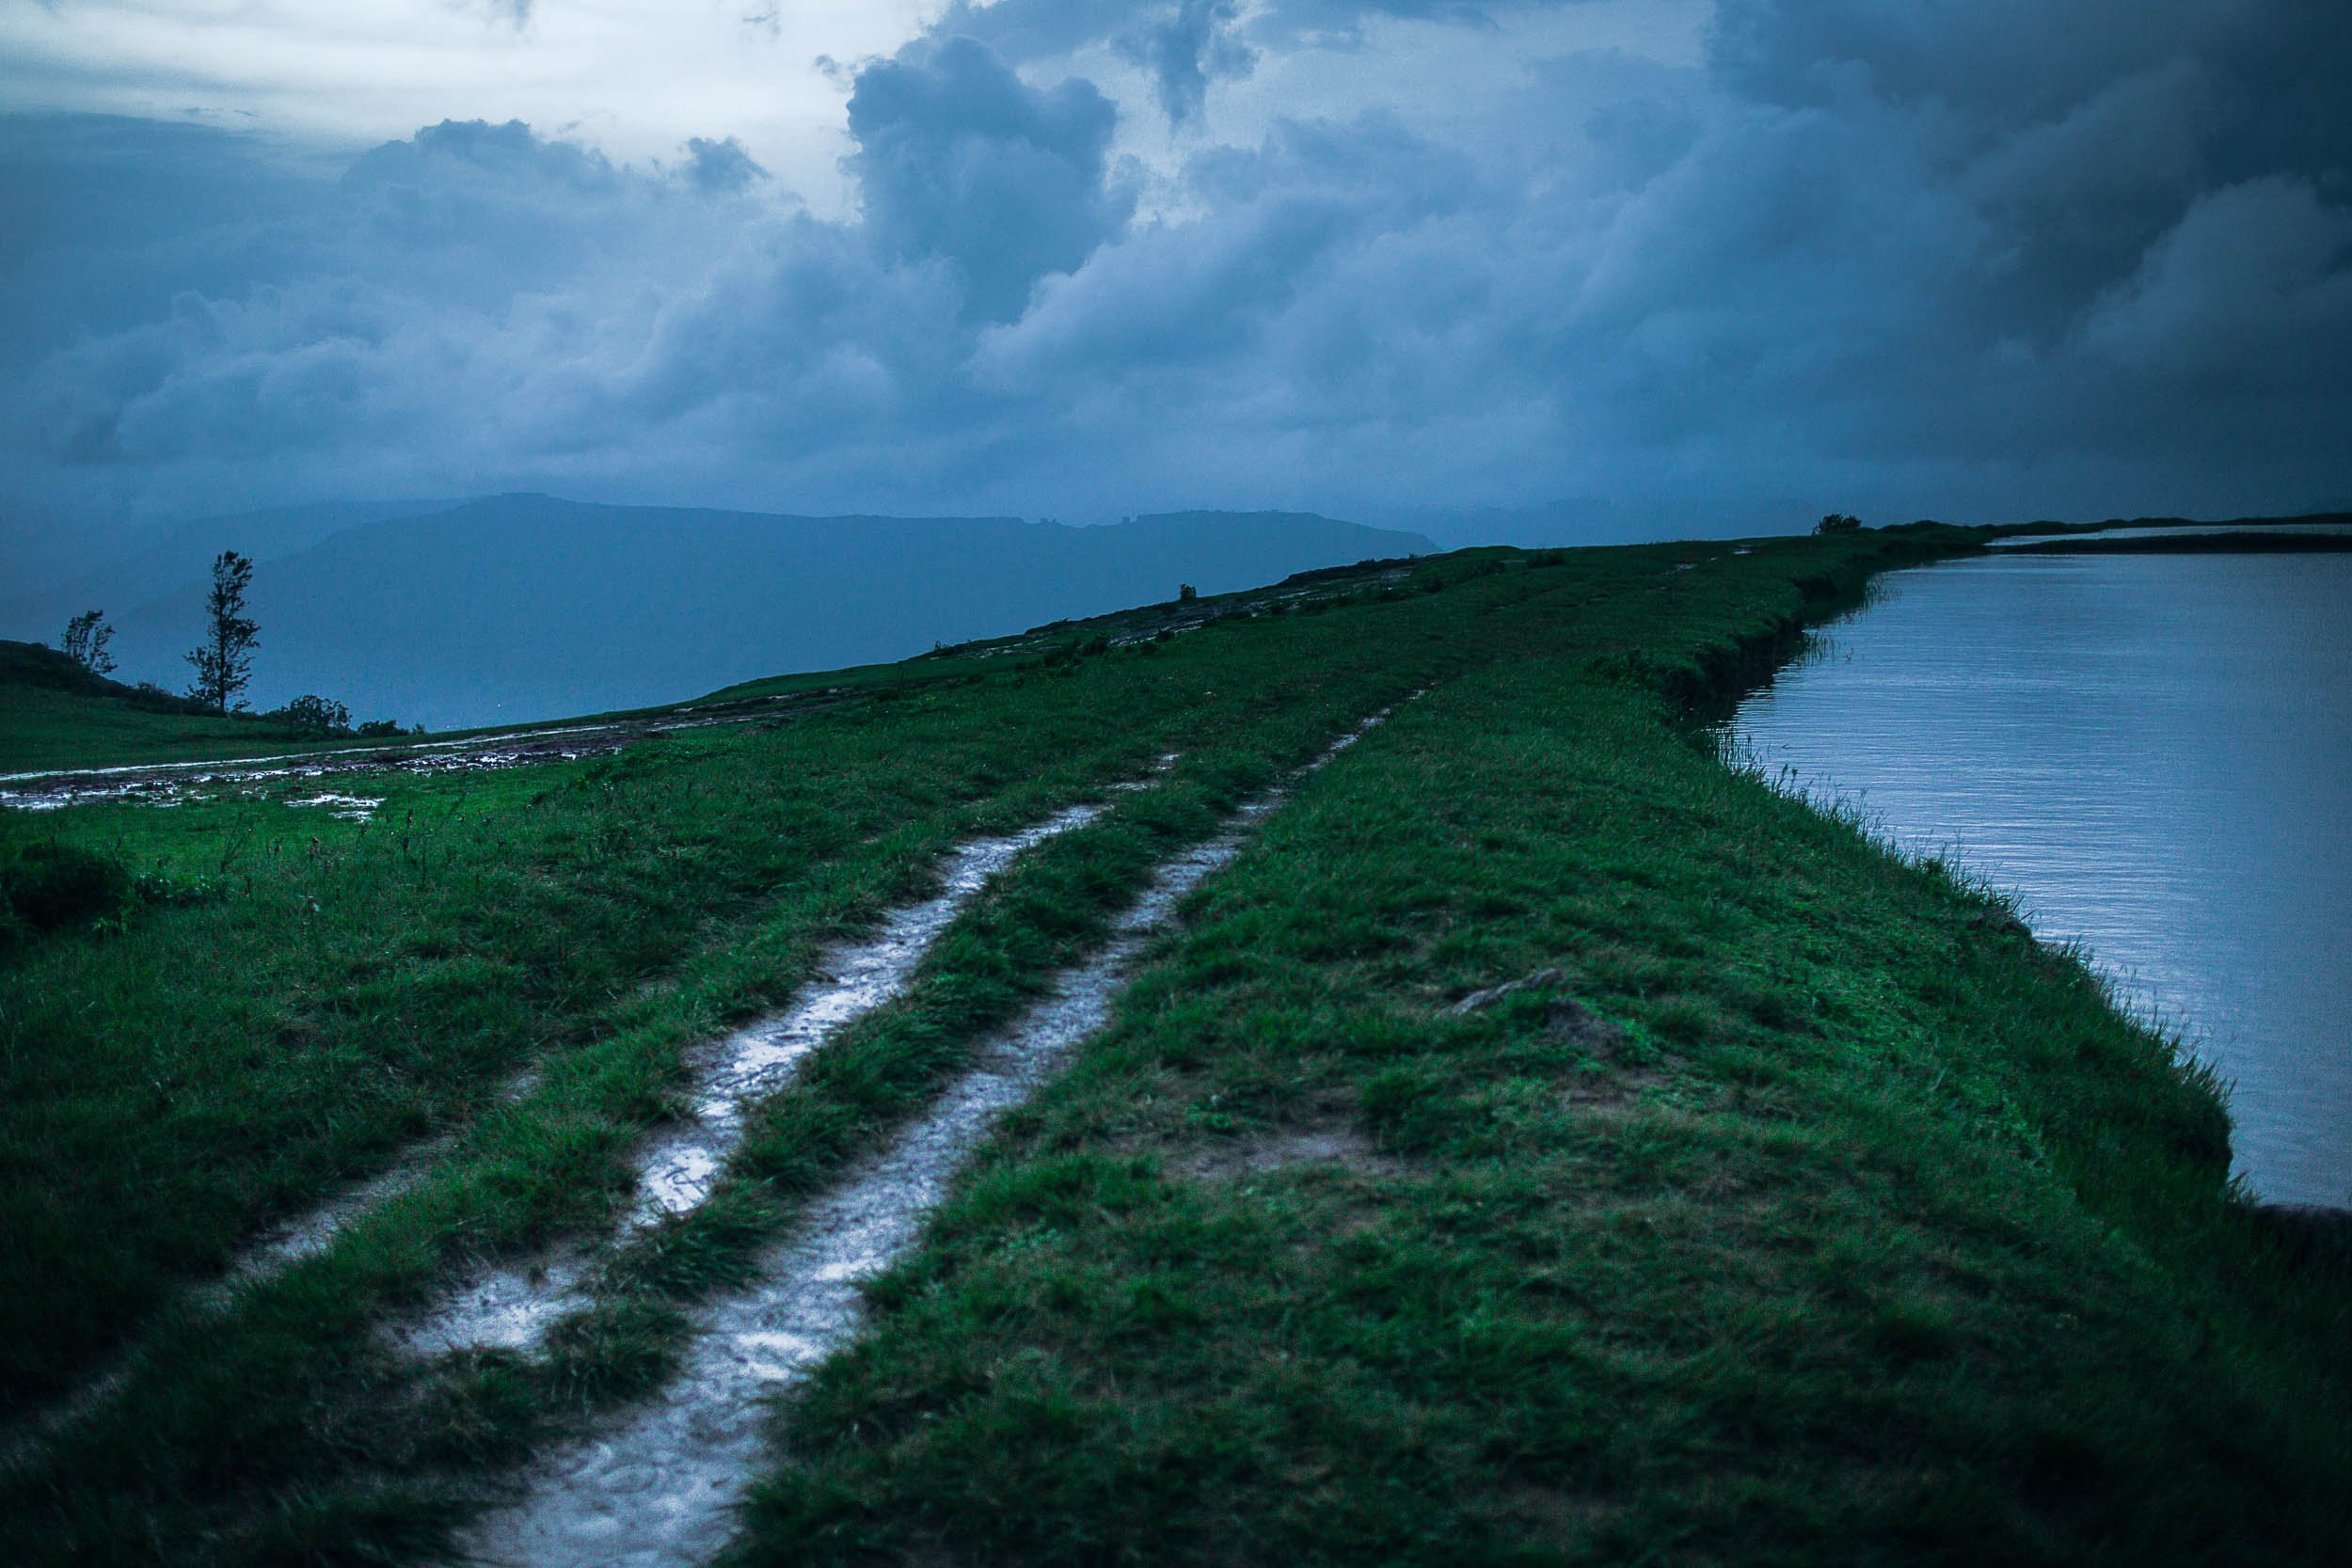 Sindhur_Photography_Travel_Landscape-Monsoon-47.JPG